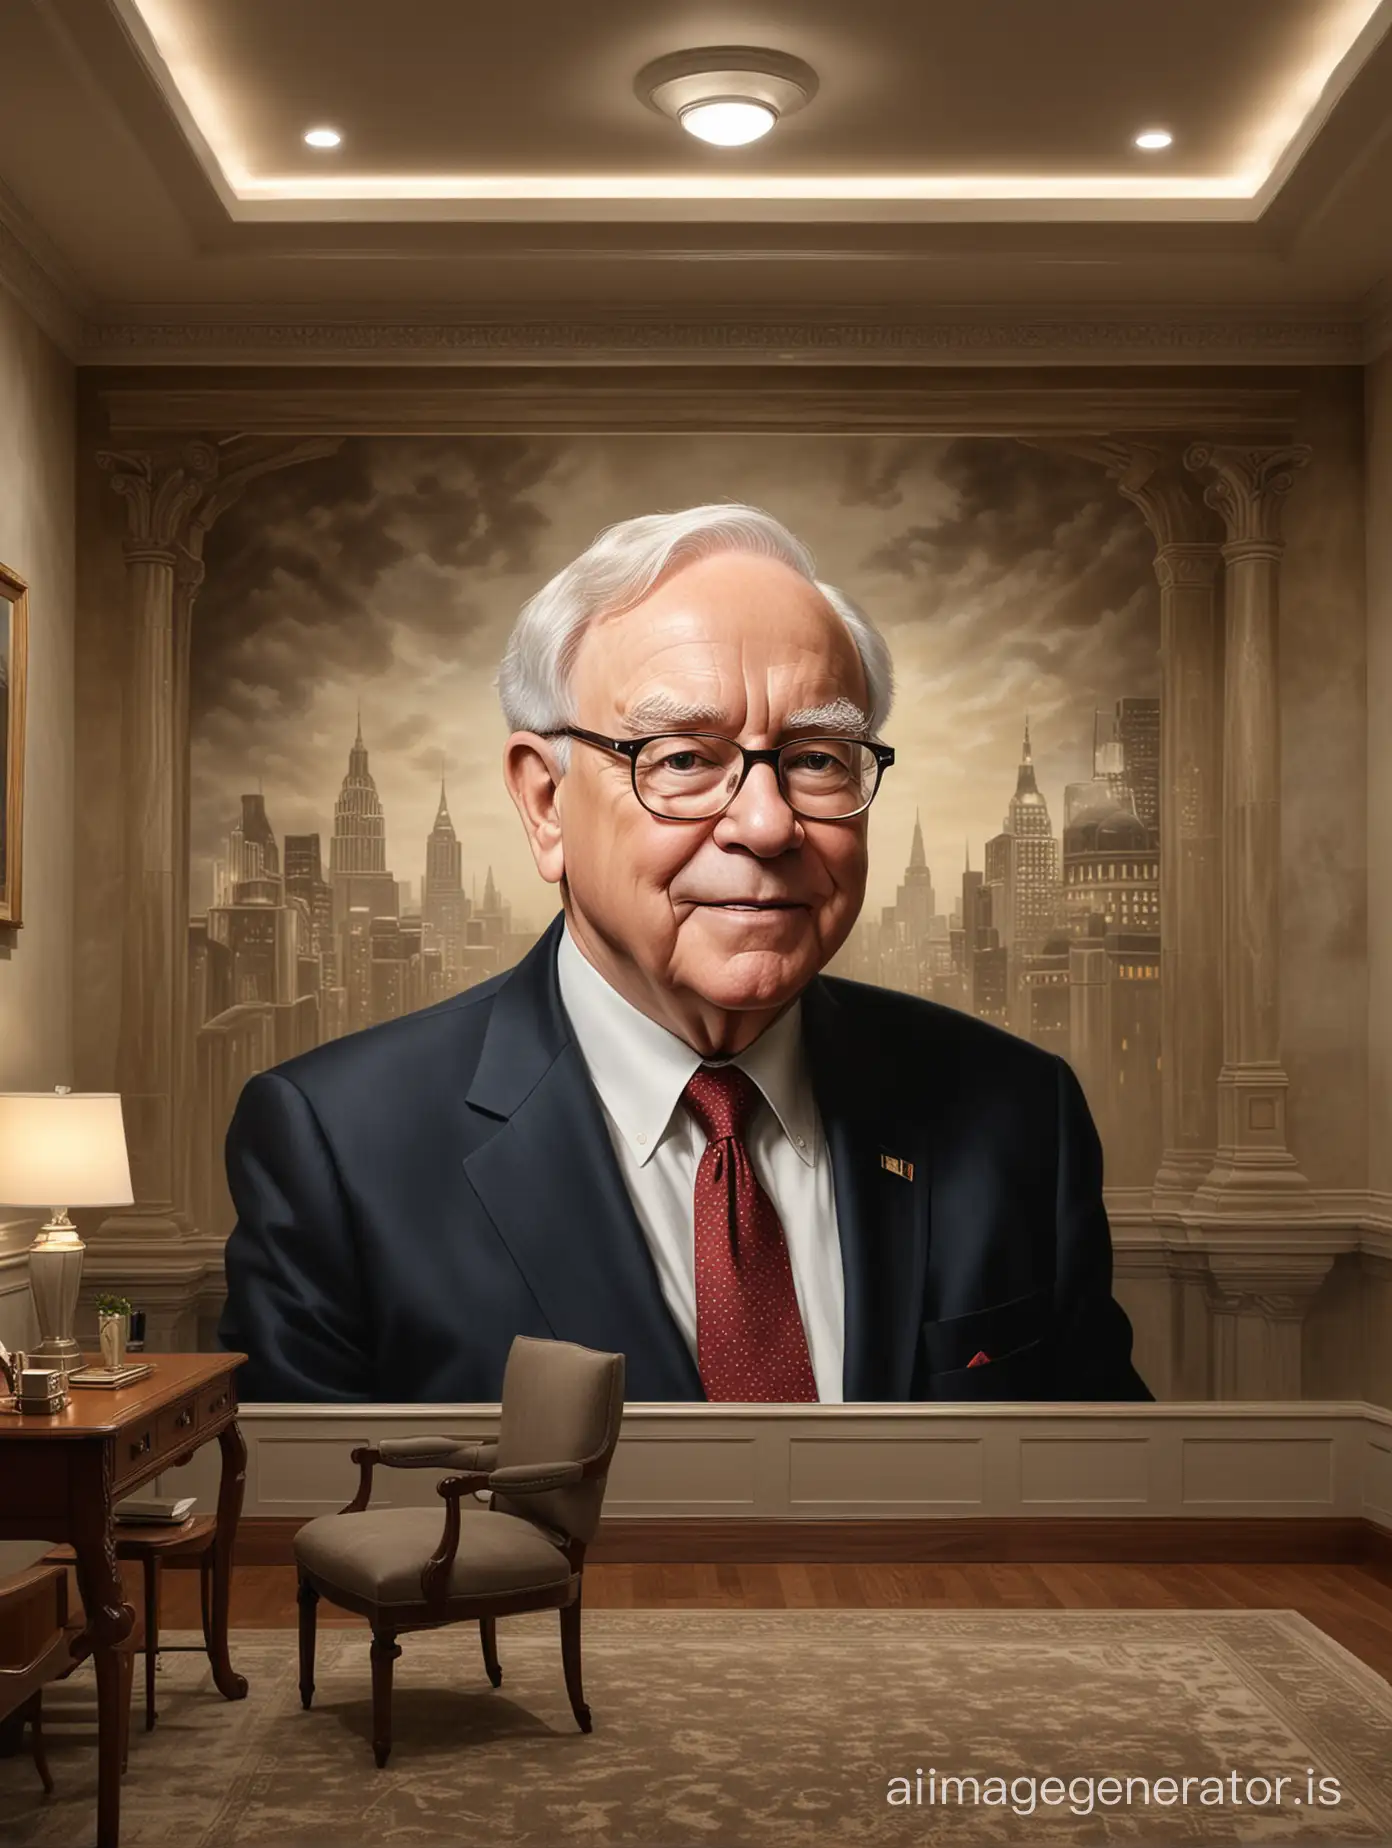 HyperRealistic-Mural-of-Warren-Buffet-Engaged-in-Conversational-Insight